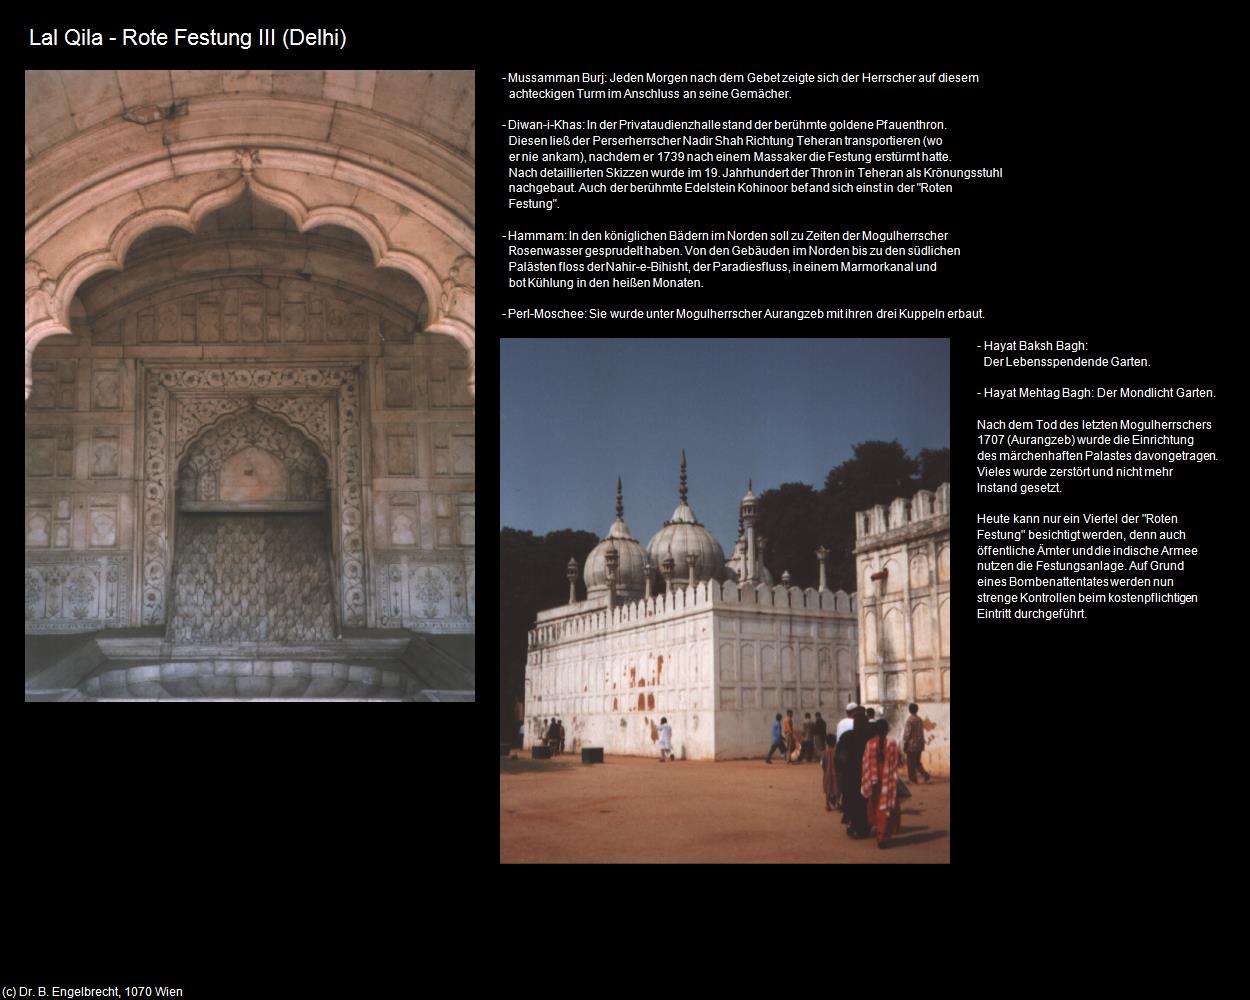 Lal Qila - Rote Festung III (Delhi) in Rajasthan - das Land der Könige